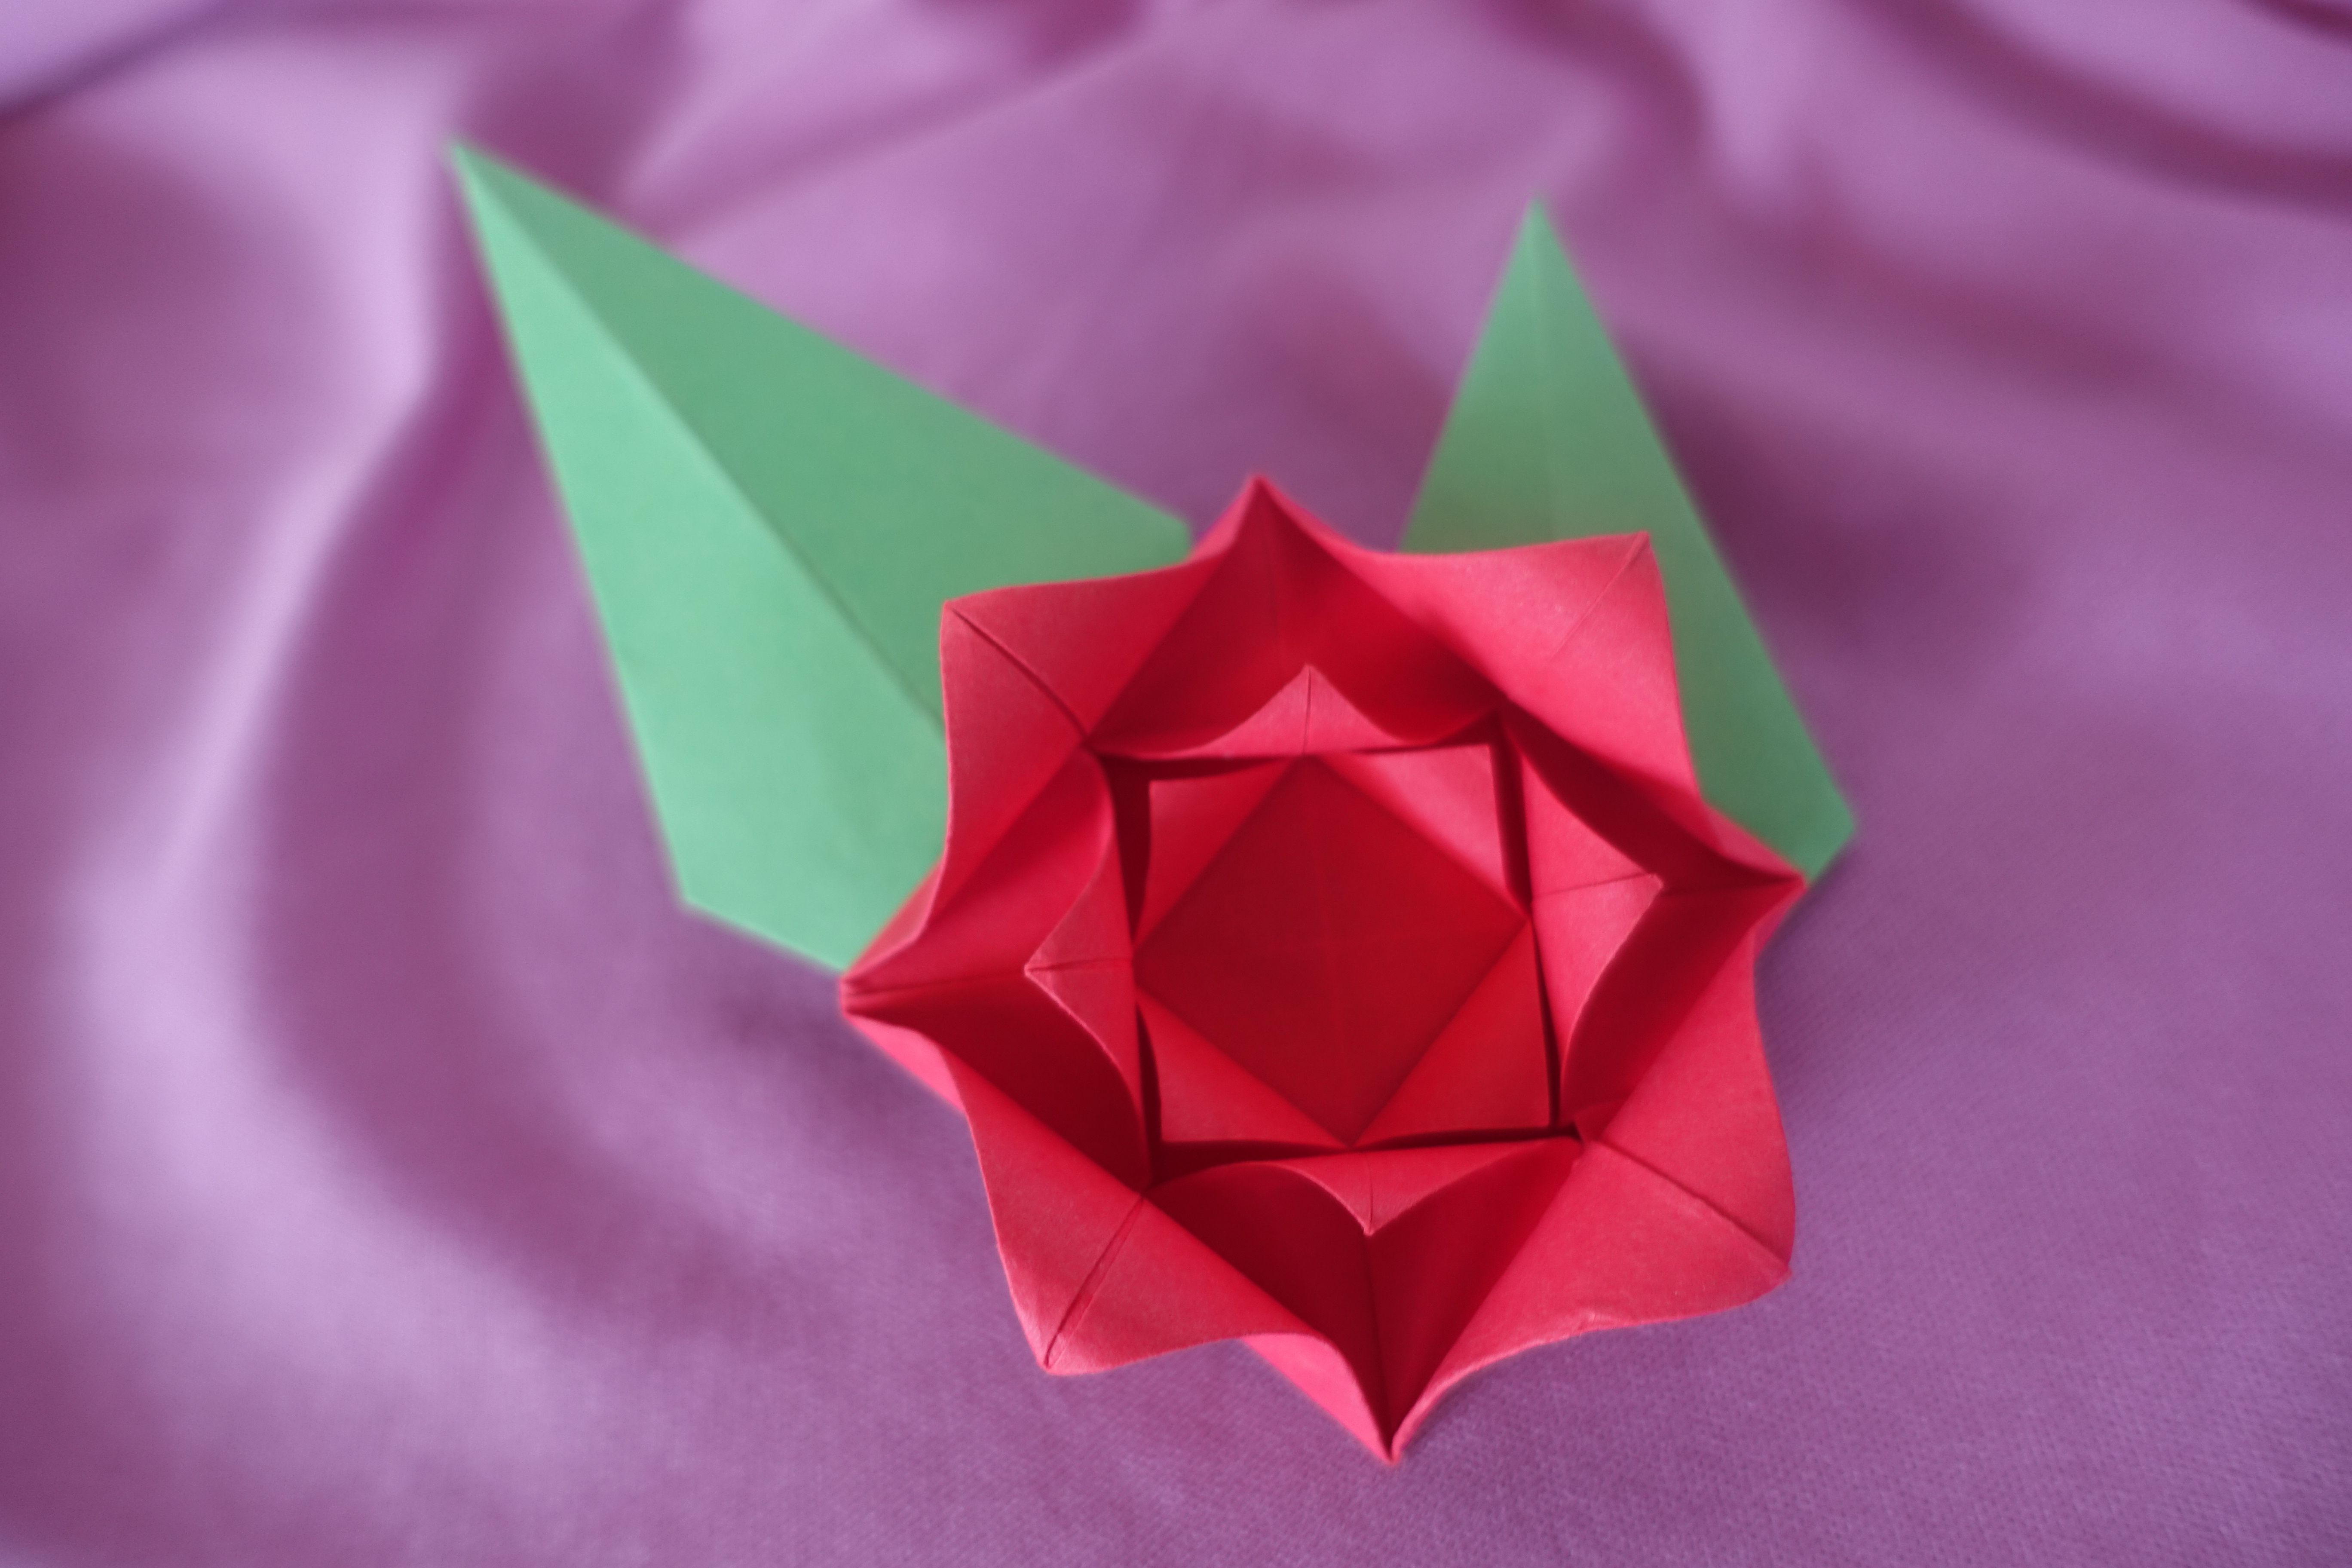 easy origami kawasaki rose instructions